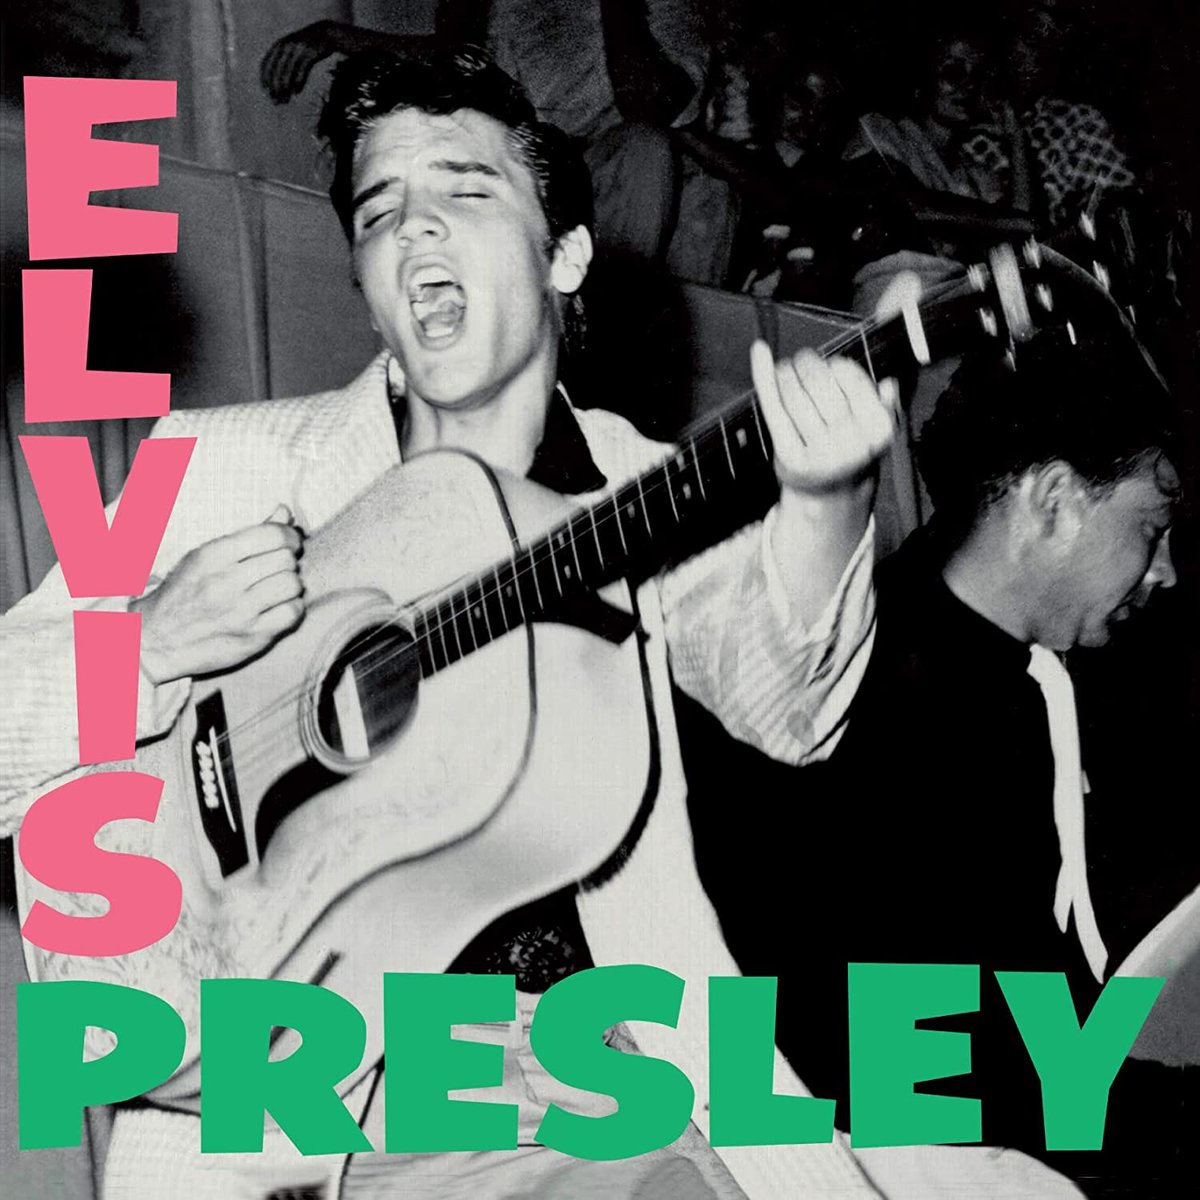 Elvis Presley - album cover, элвис, элвис пресли, elvis, обложка альбома - оригинал